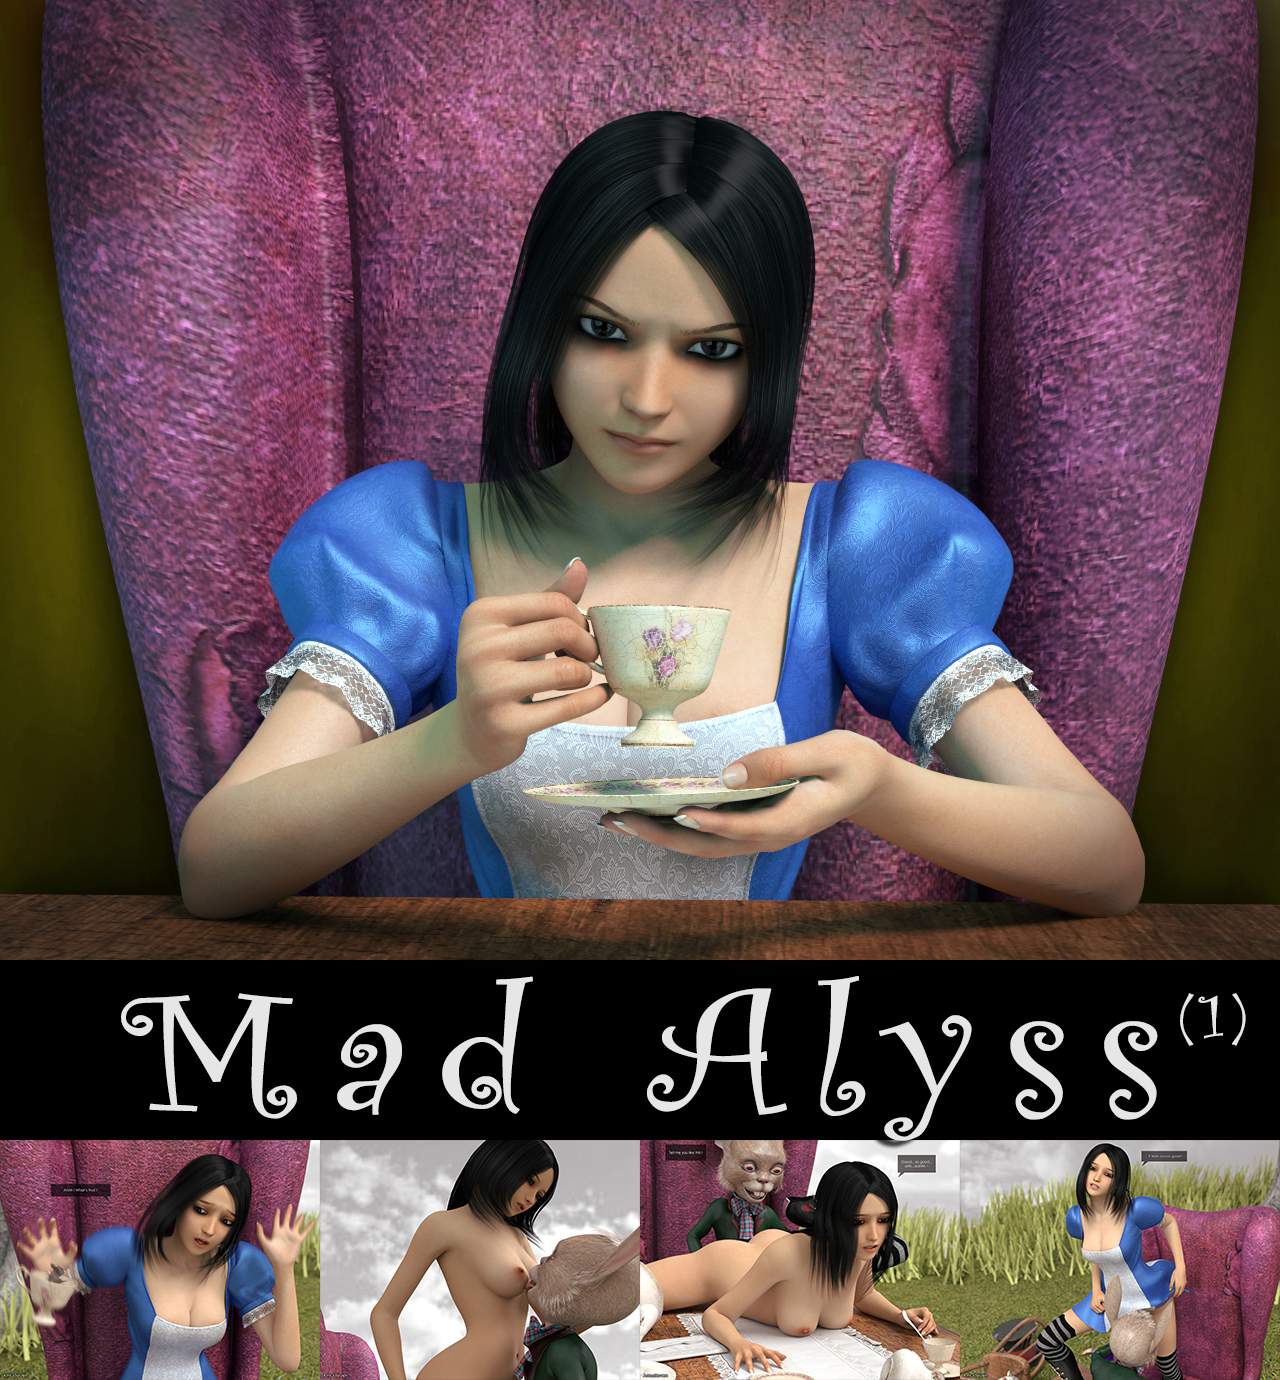 Mad Alyss